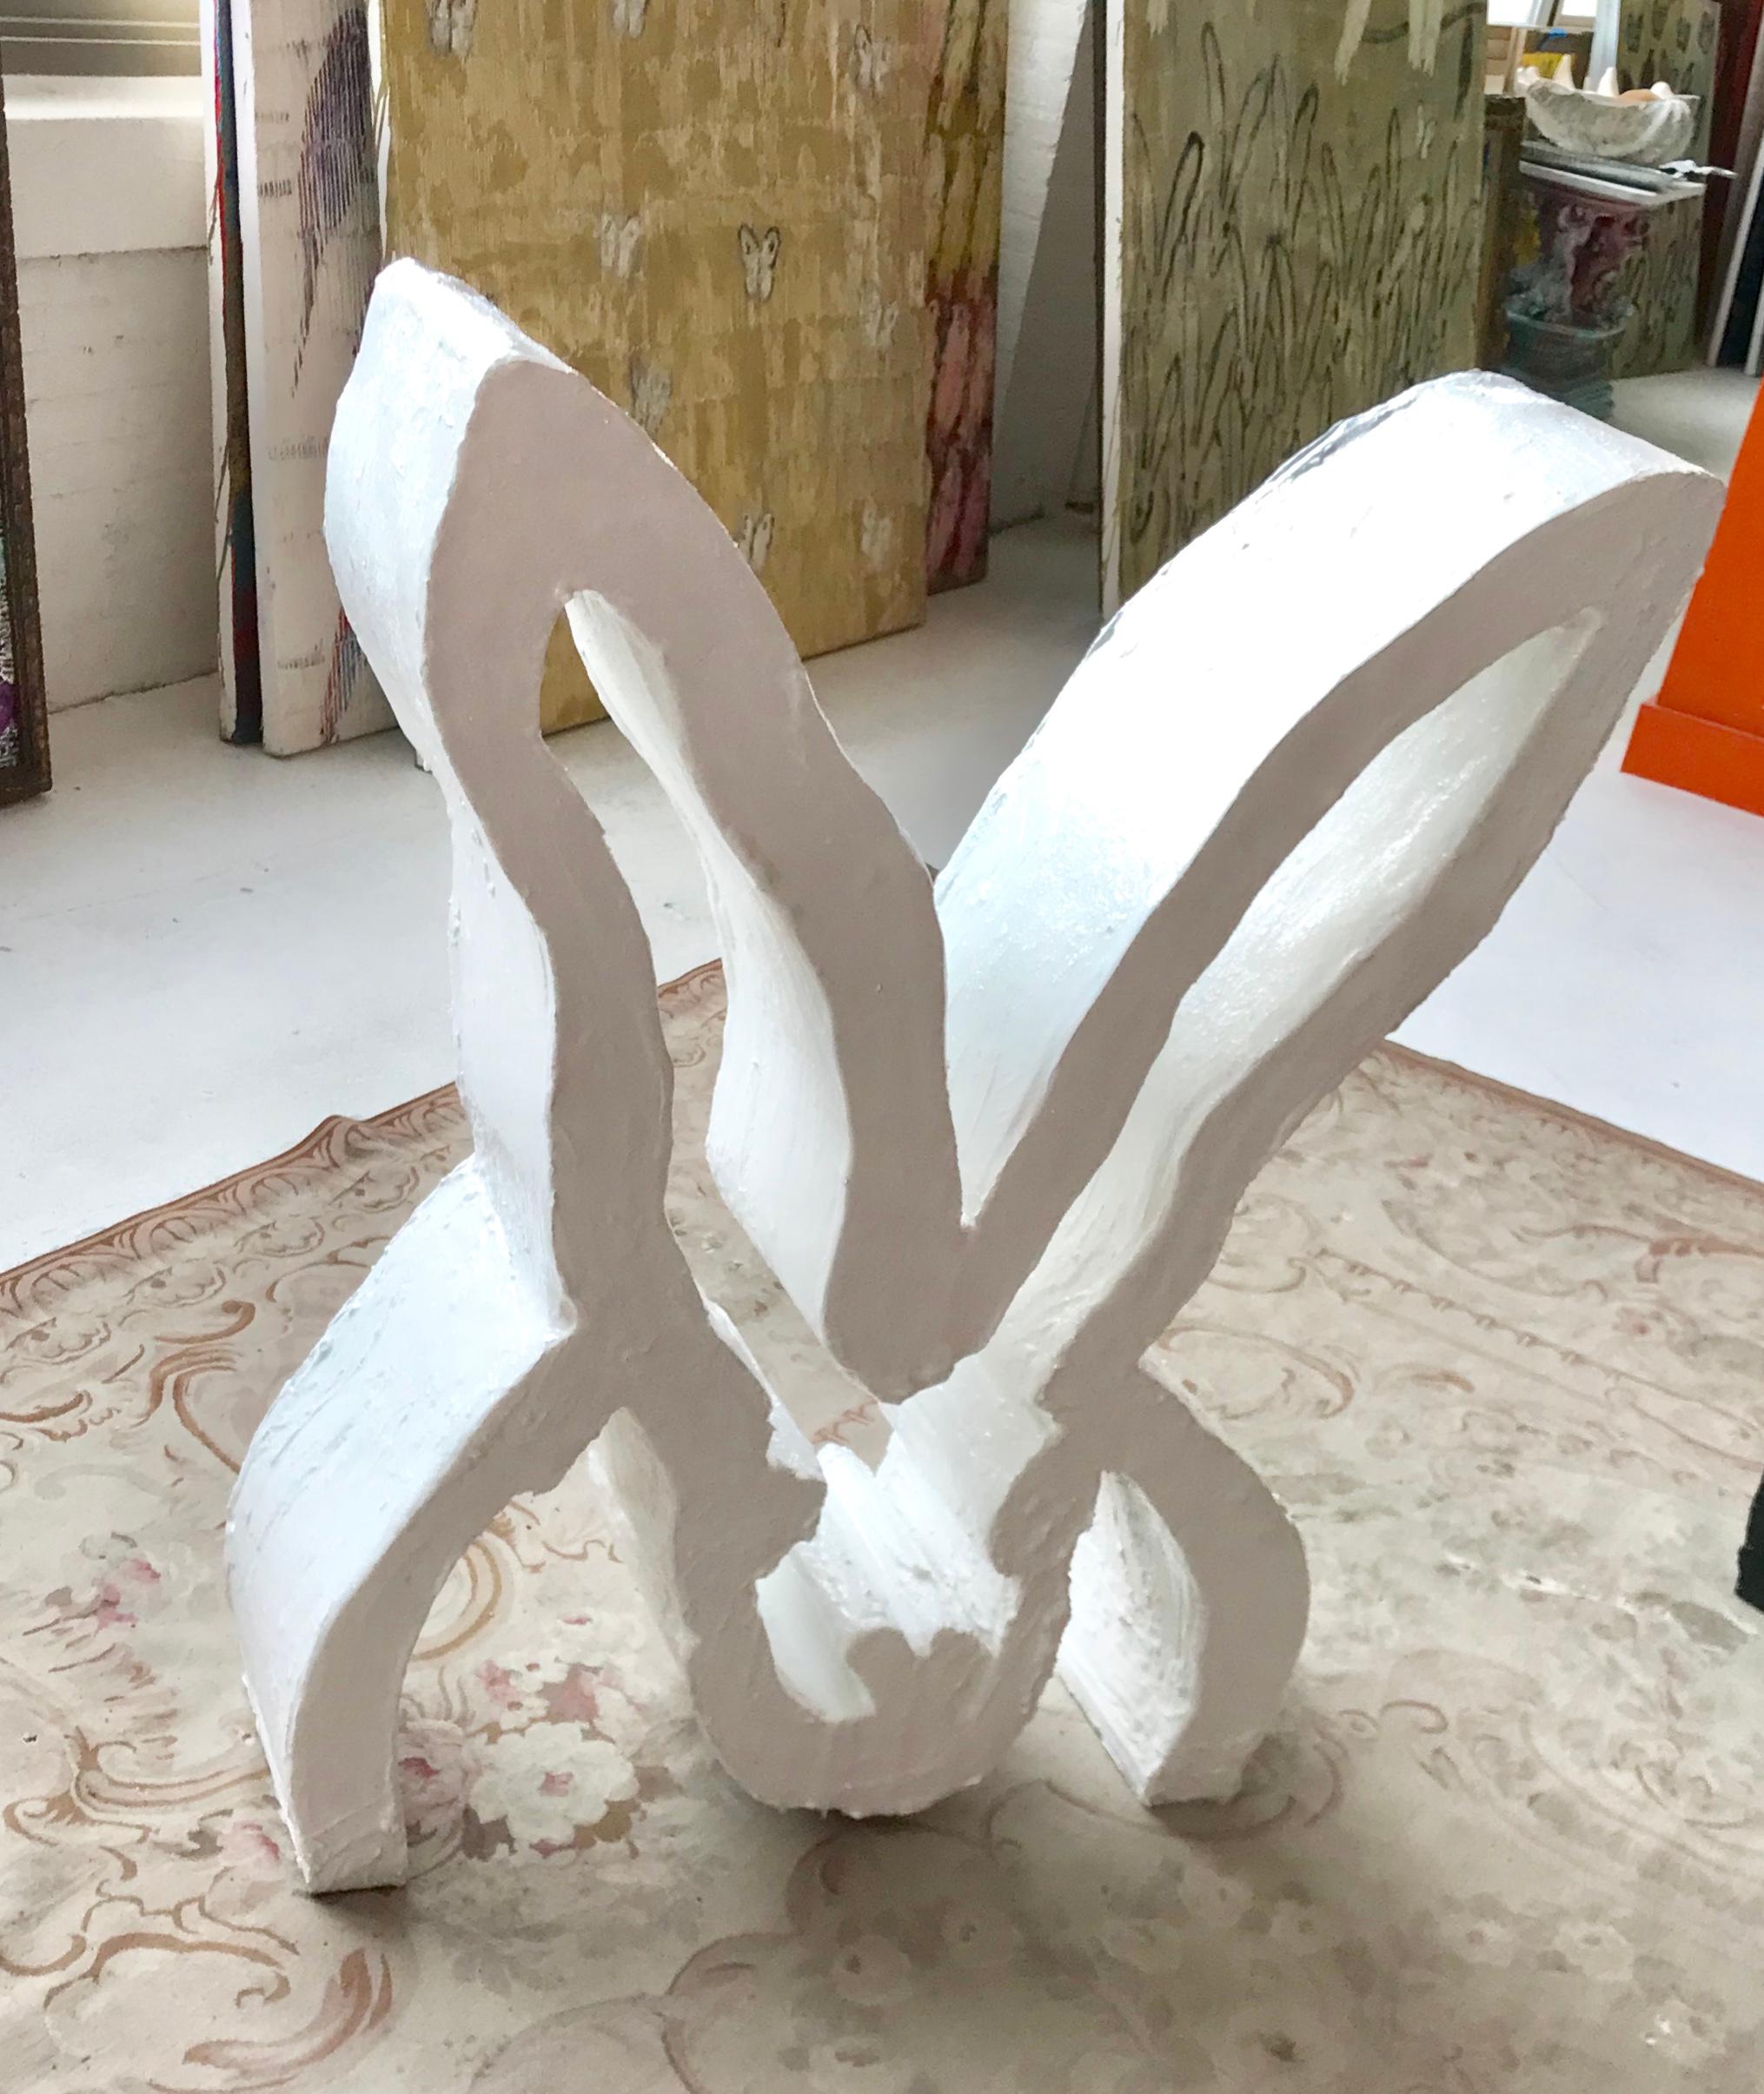 White bunny sculpture - Sculpture by Hunt Slonem